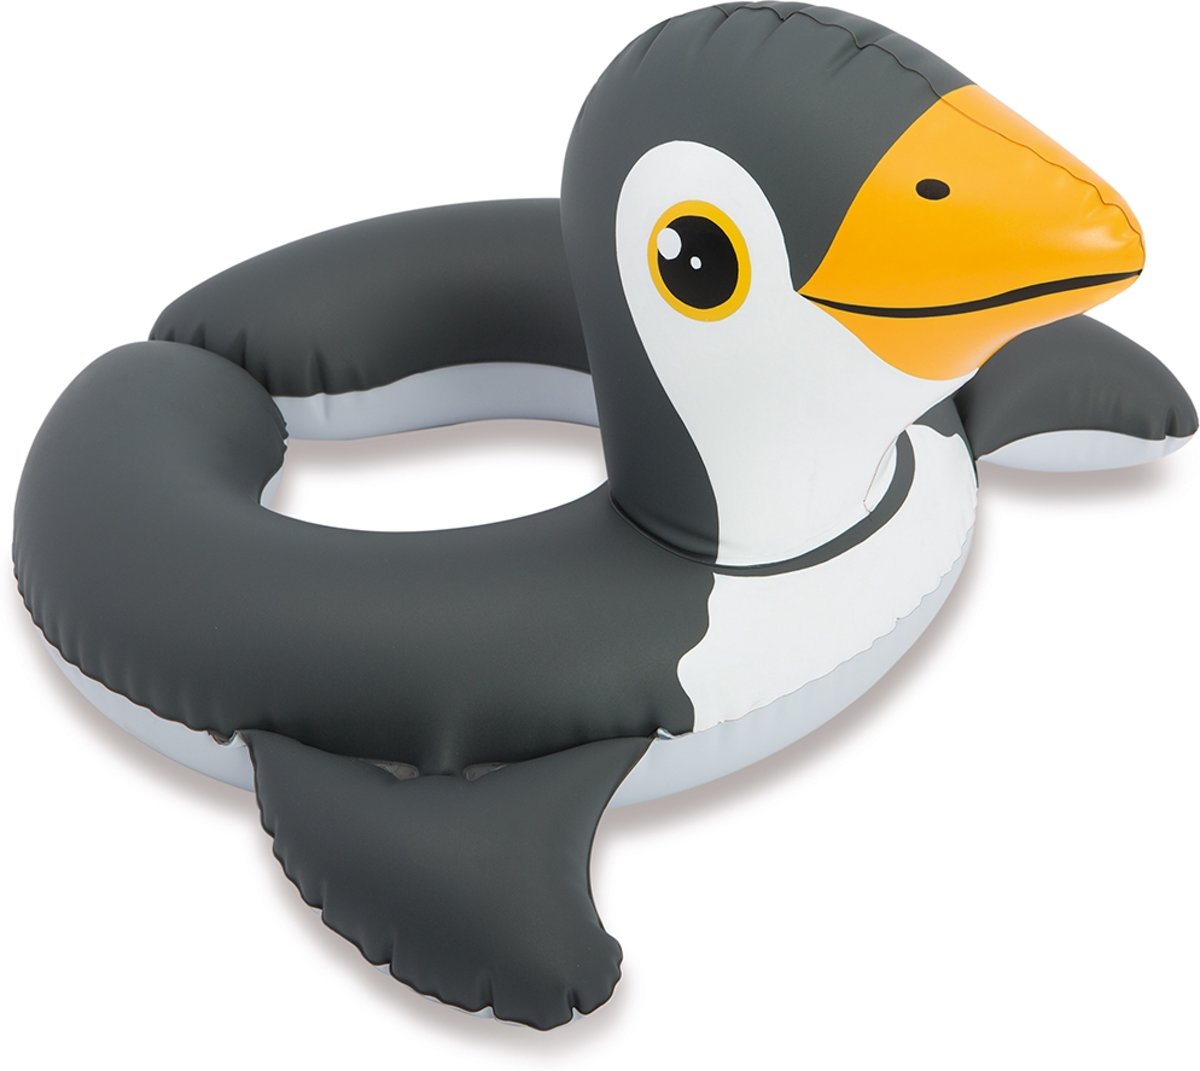 Opblaasband - Zwemring Junior - Intex - Pinguïn